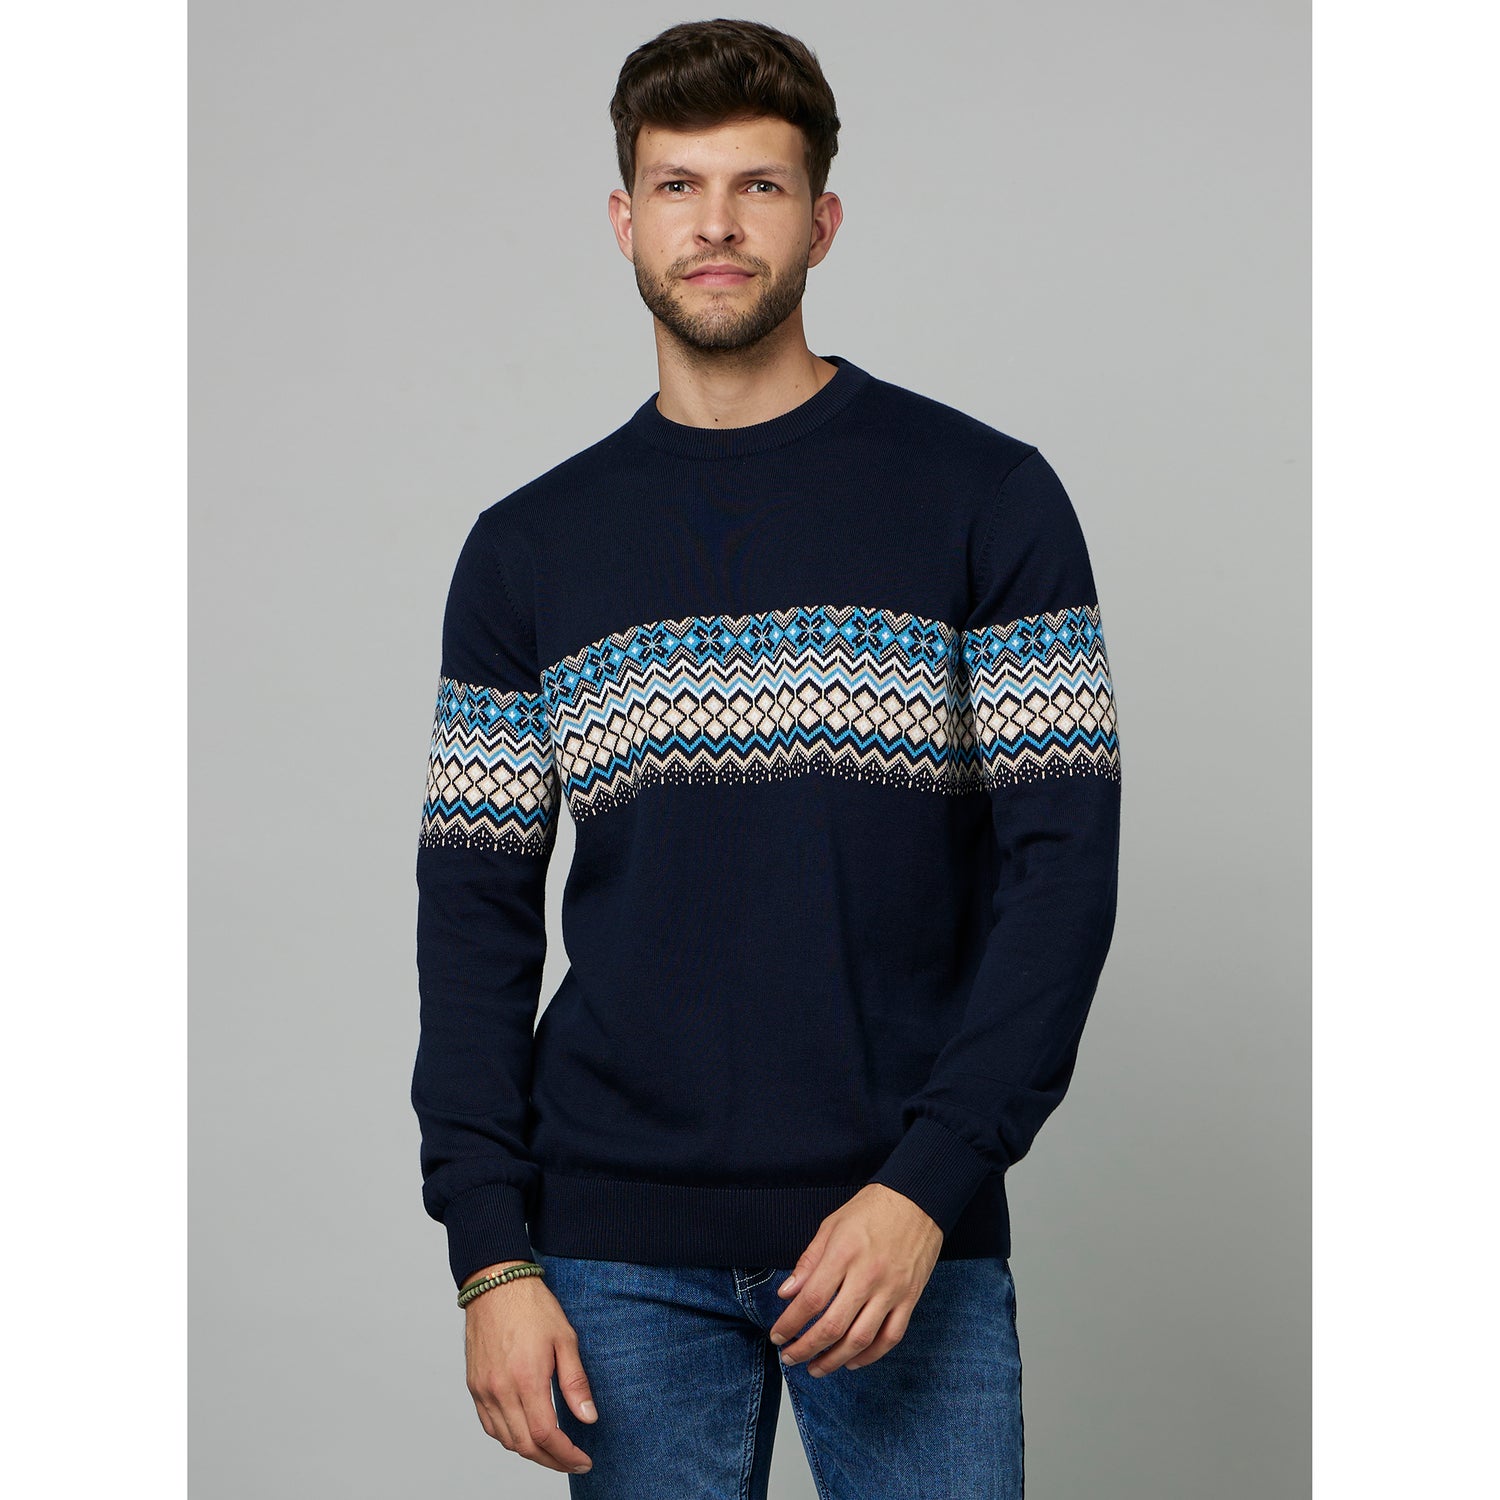 Navy Fair Isle Self Design Cotton Pullover Sweater (FEMERRY)